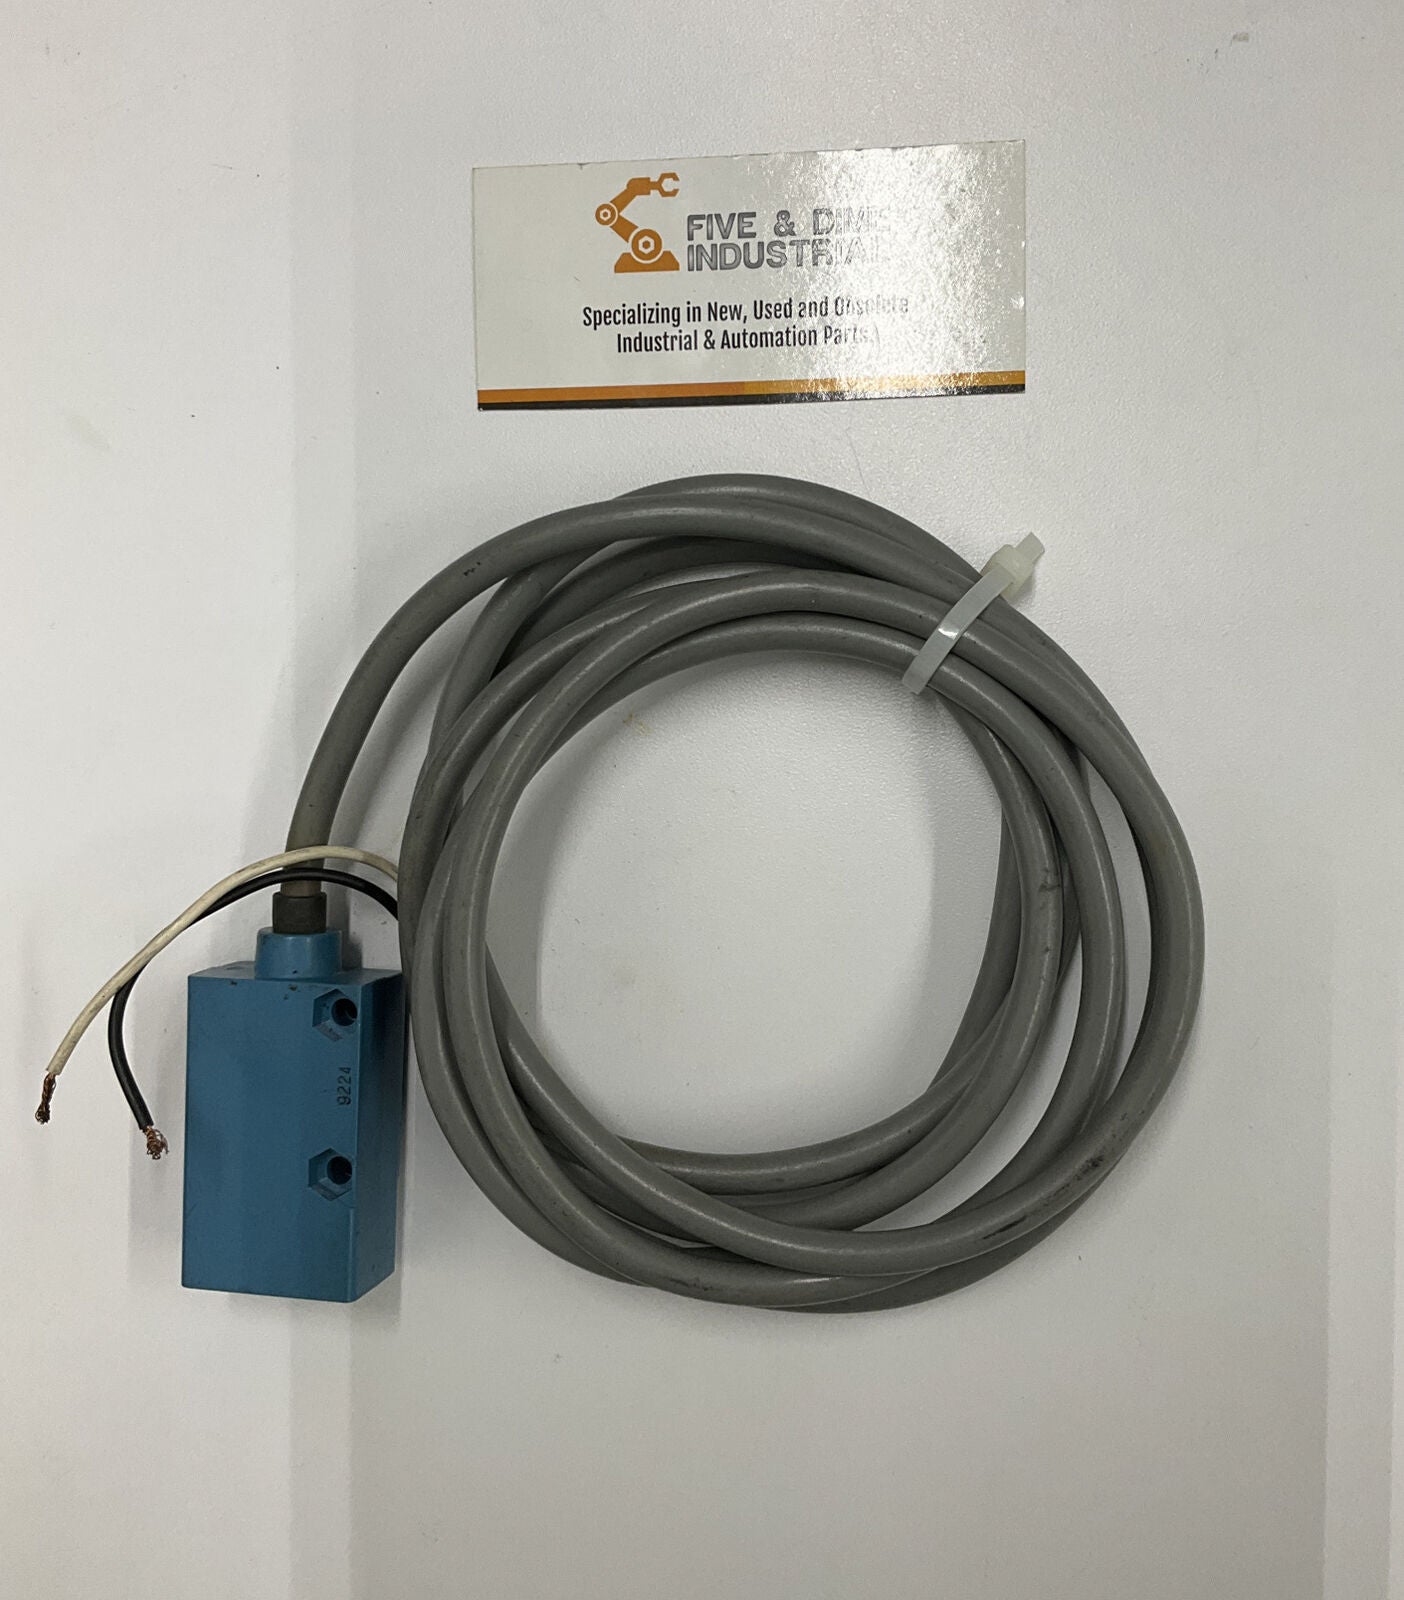 Honeywell Micro Switch FE7C-TT2R-M Mini Photoelectric Control (BL254)